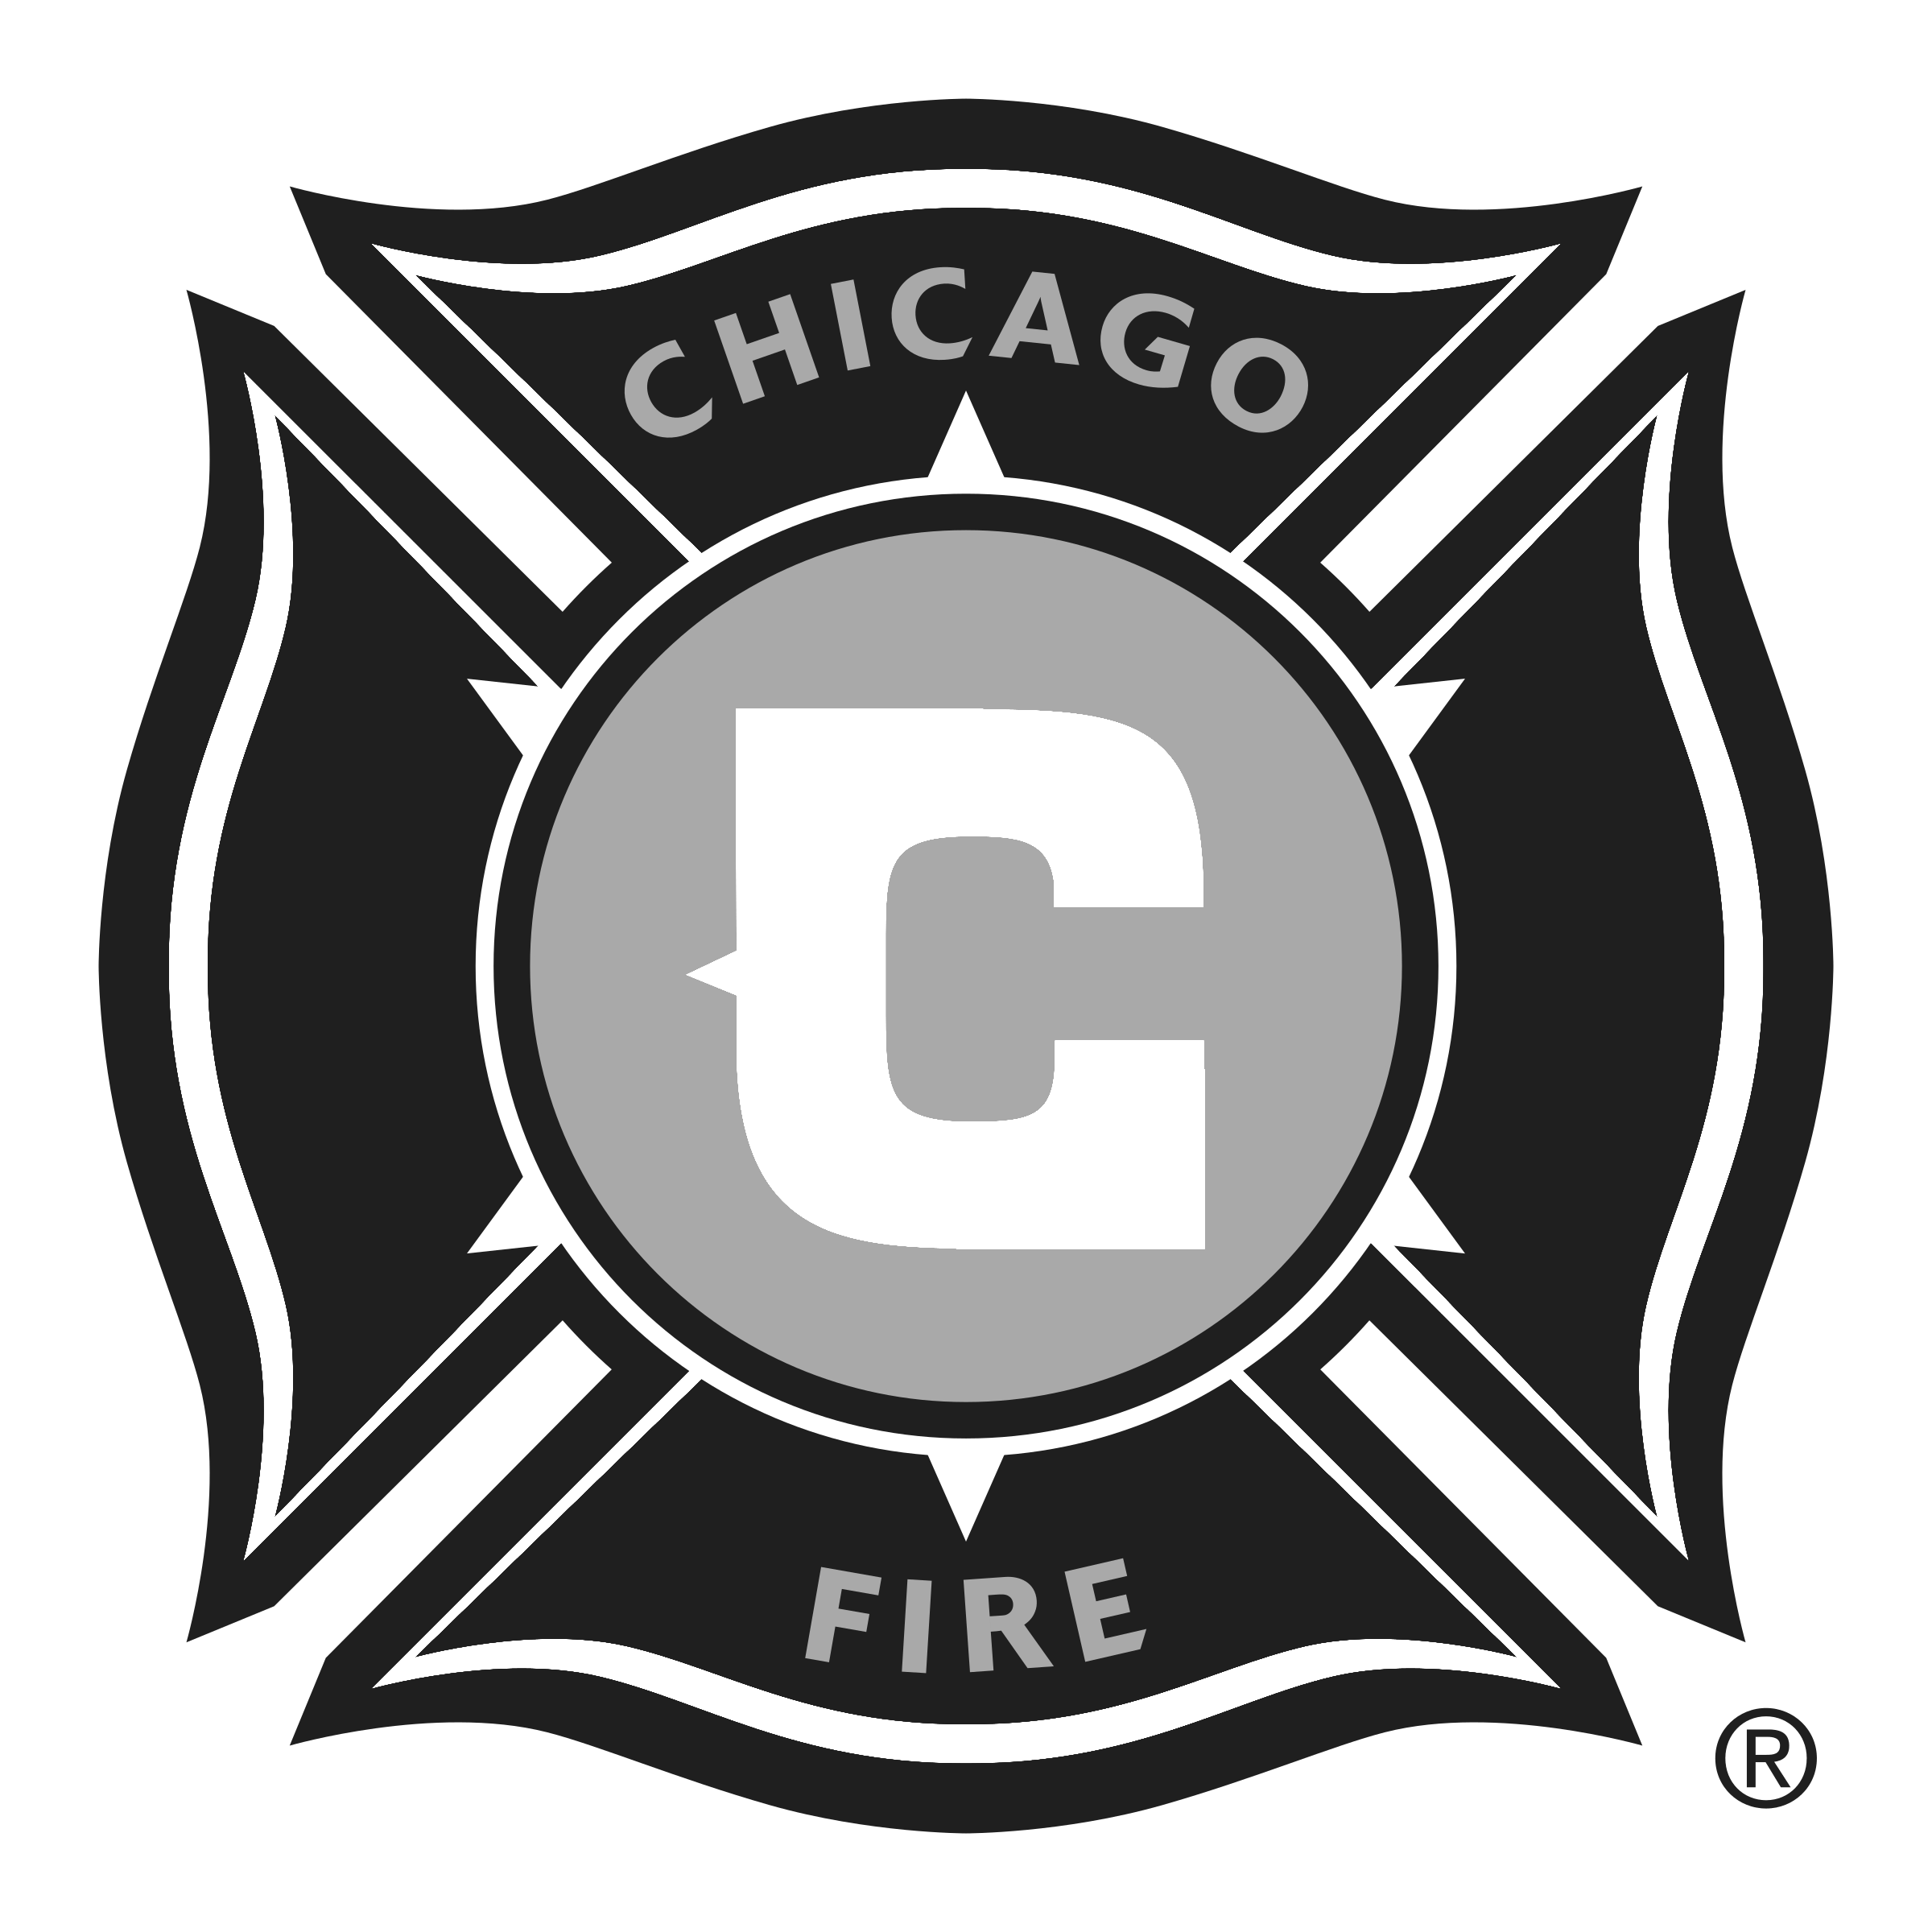 Black and White Soccer Teams Logo - Chicago Fire Soccer Club Logo PNG Transparent & SVG Vector - Freebie ...